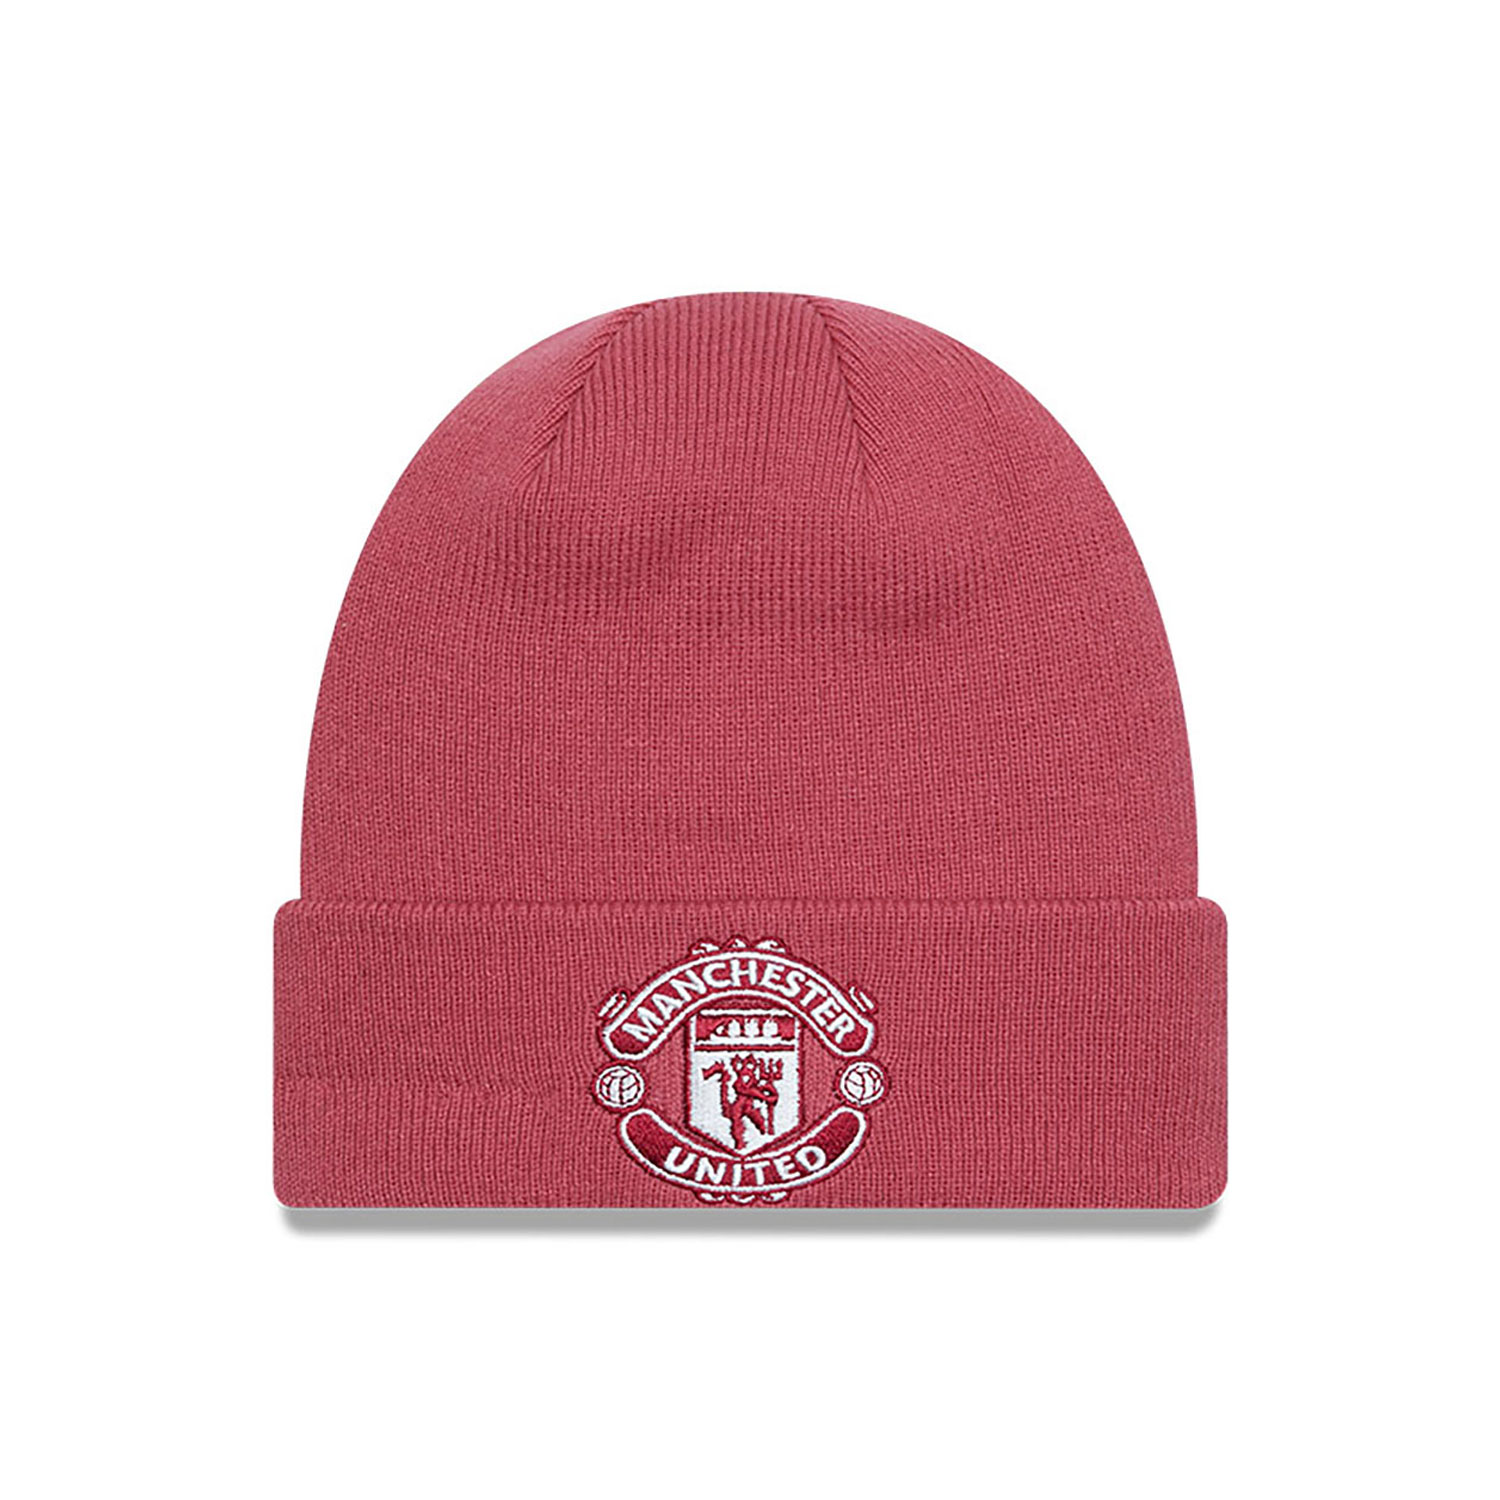 Manchester United FC Pink Cuff Knit Beanie Hat